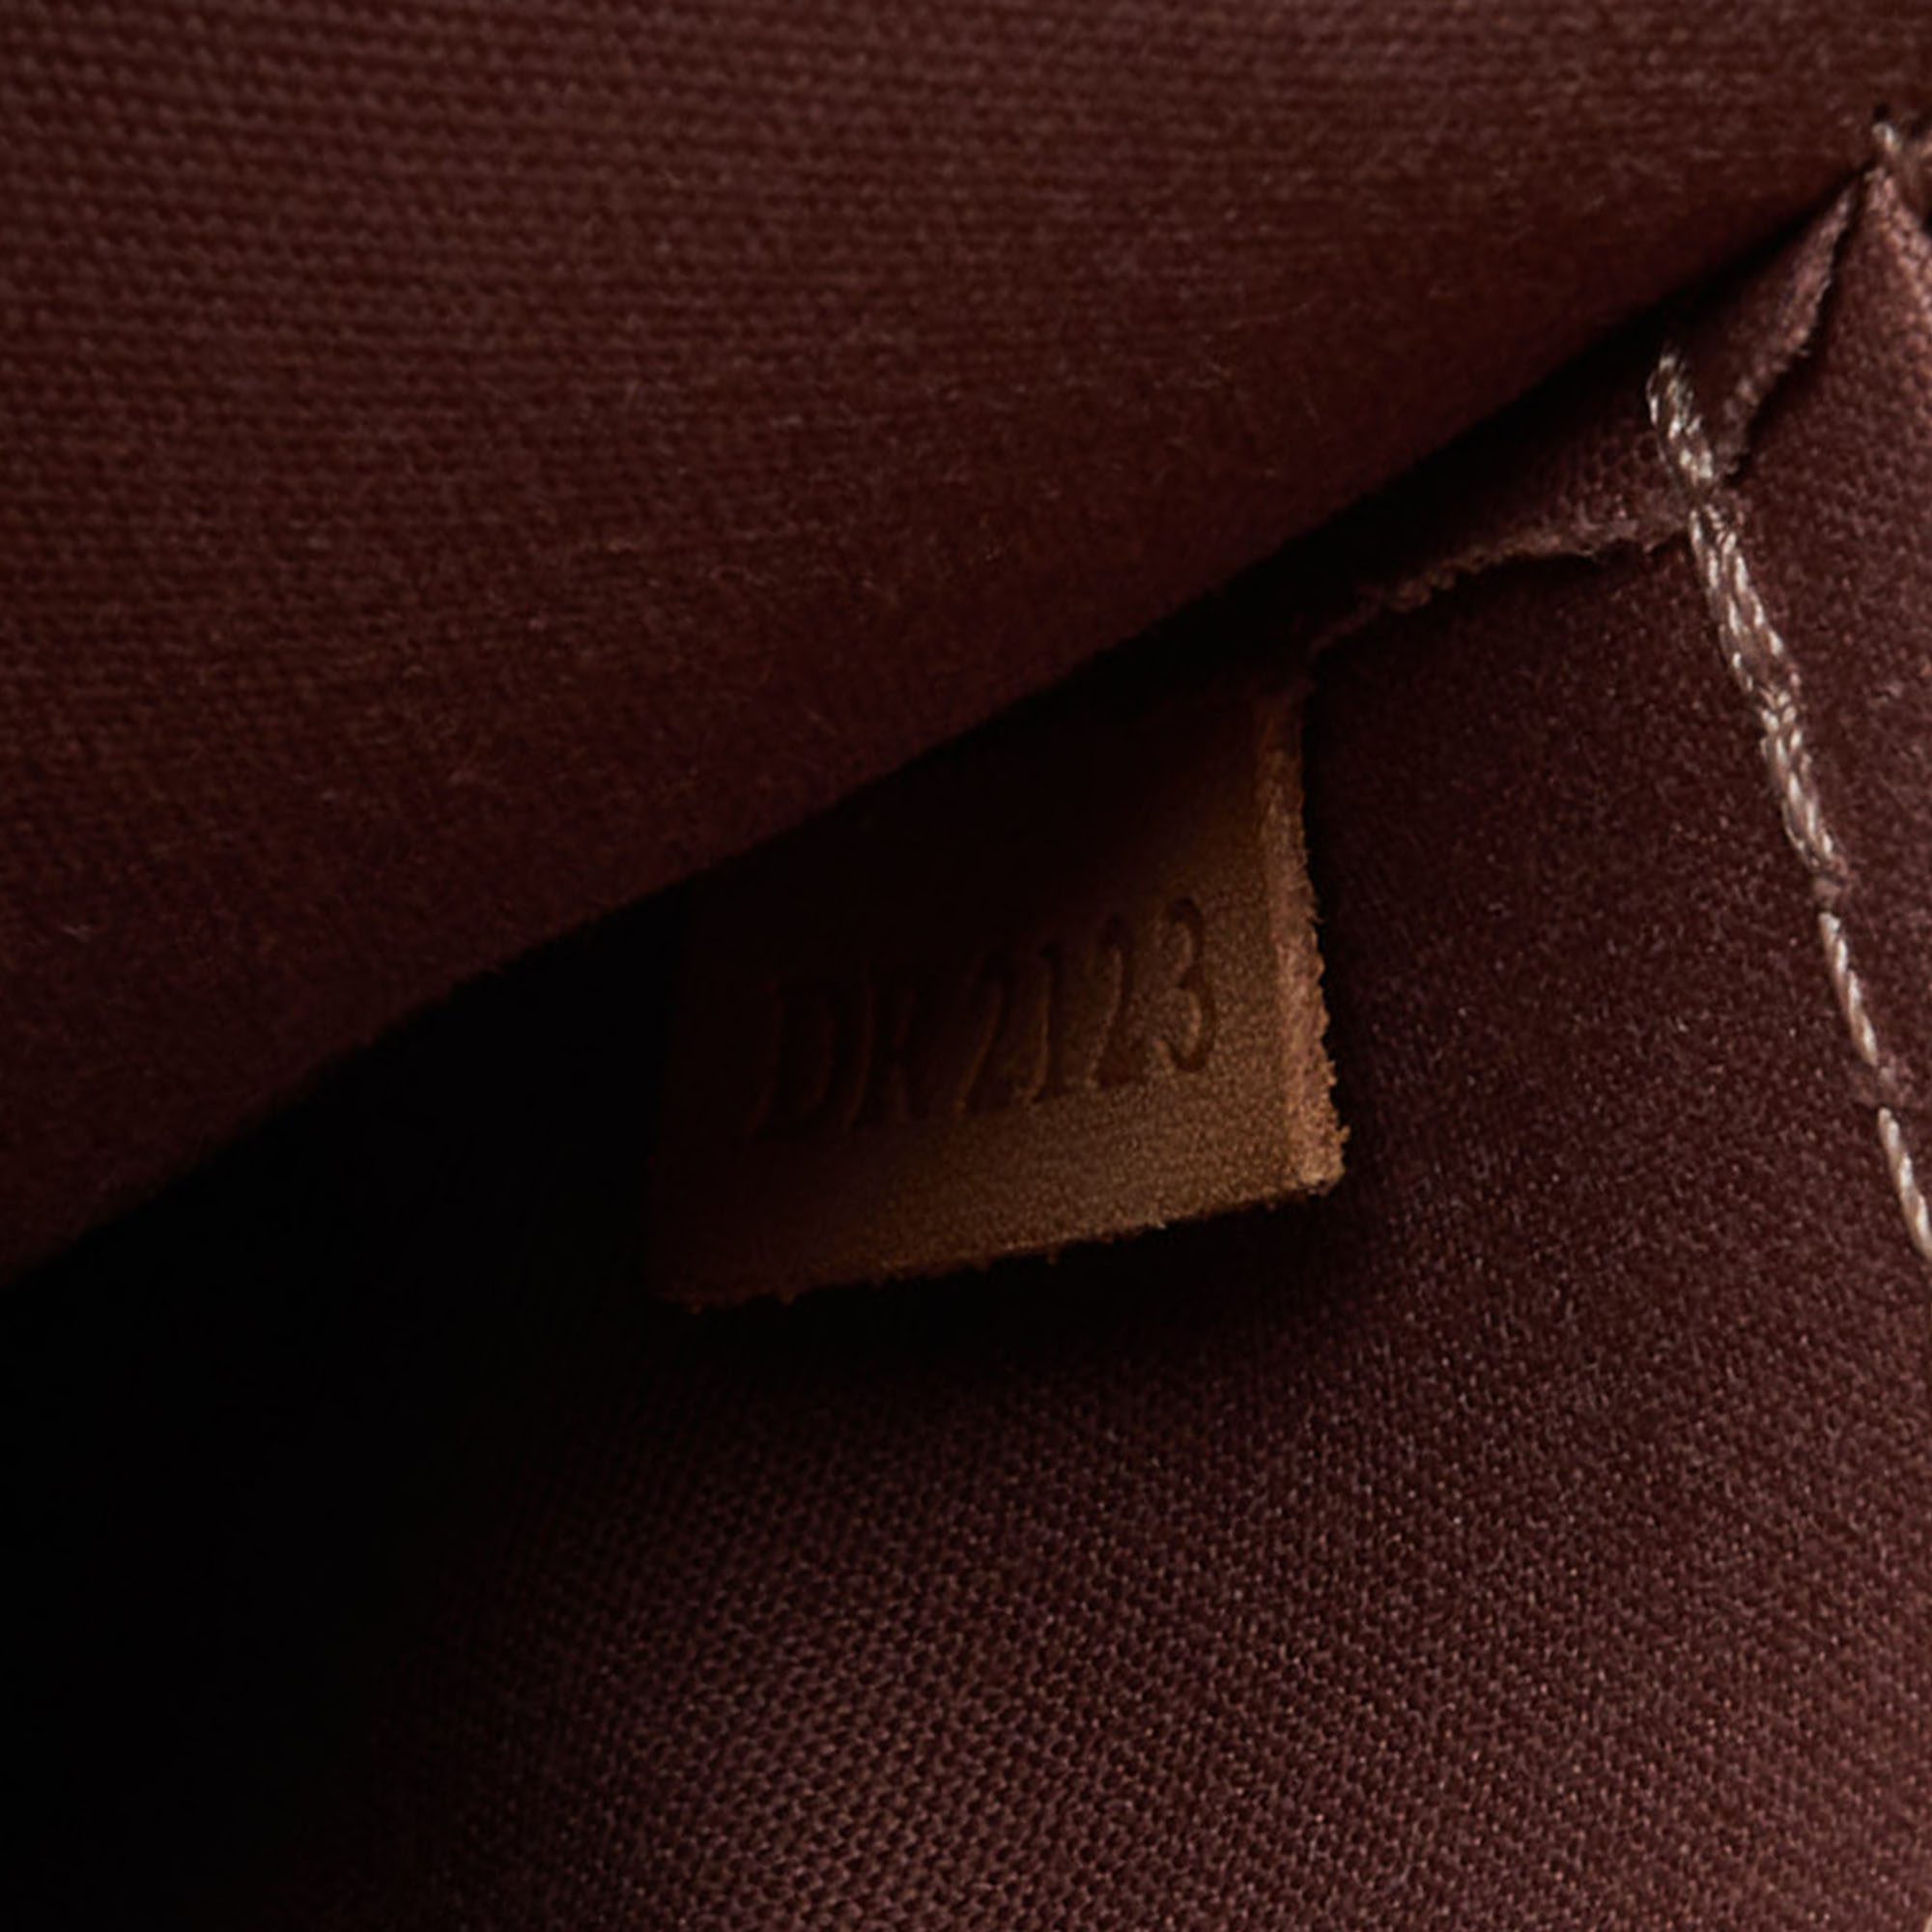 Louis Vuitton Rose Velours Monogram Vernis Brea MM Bag